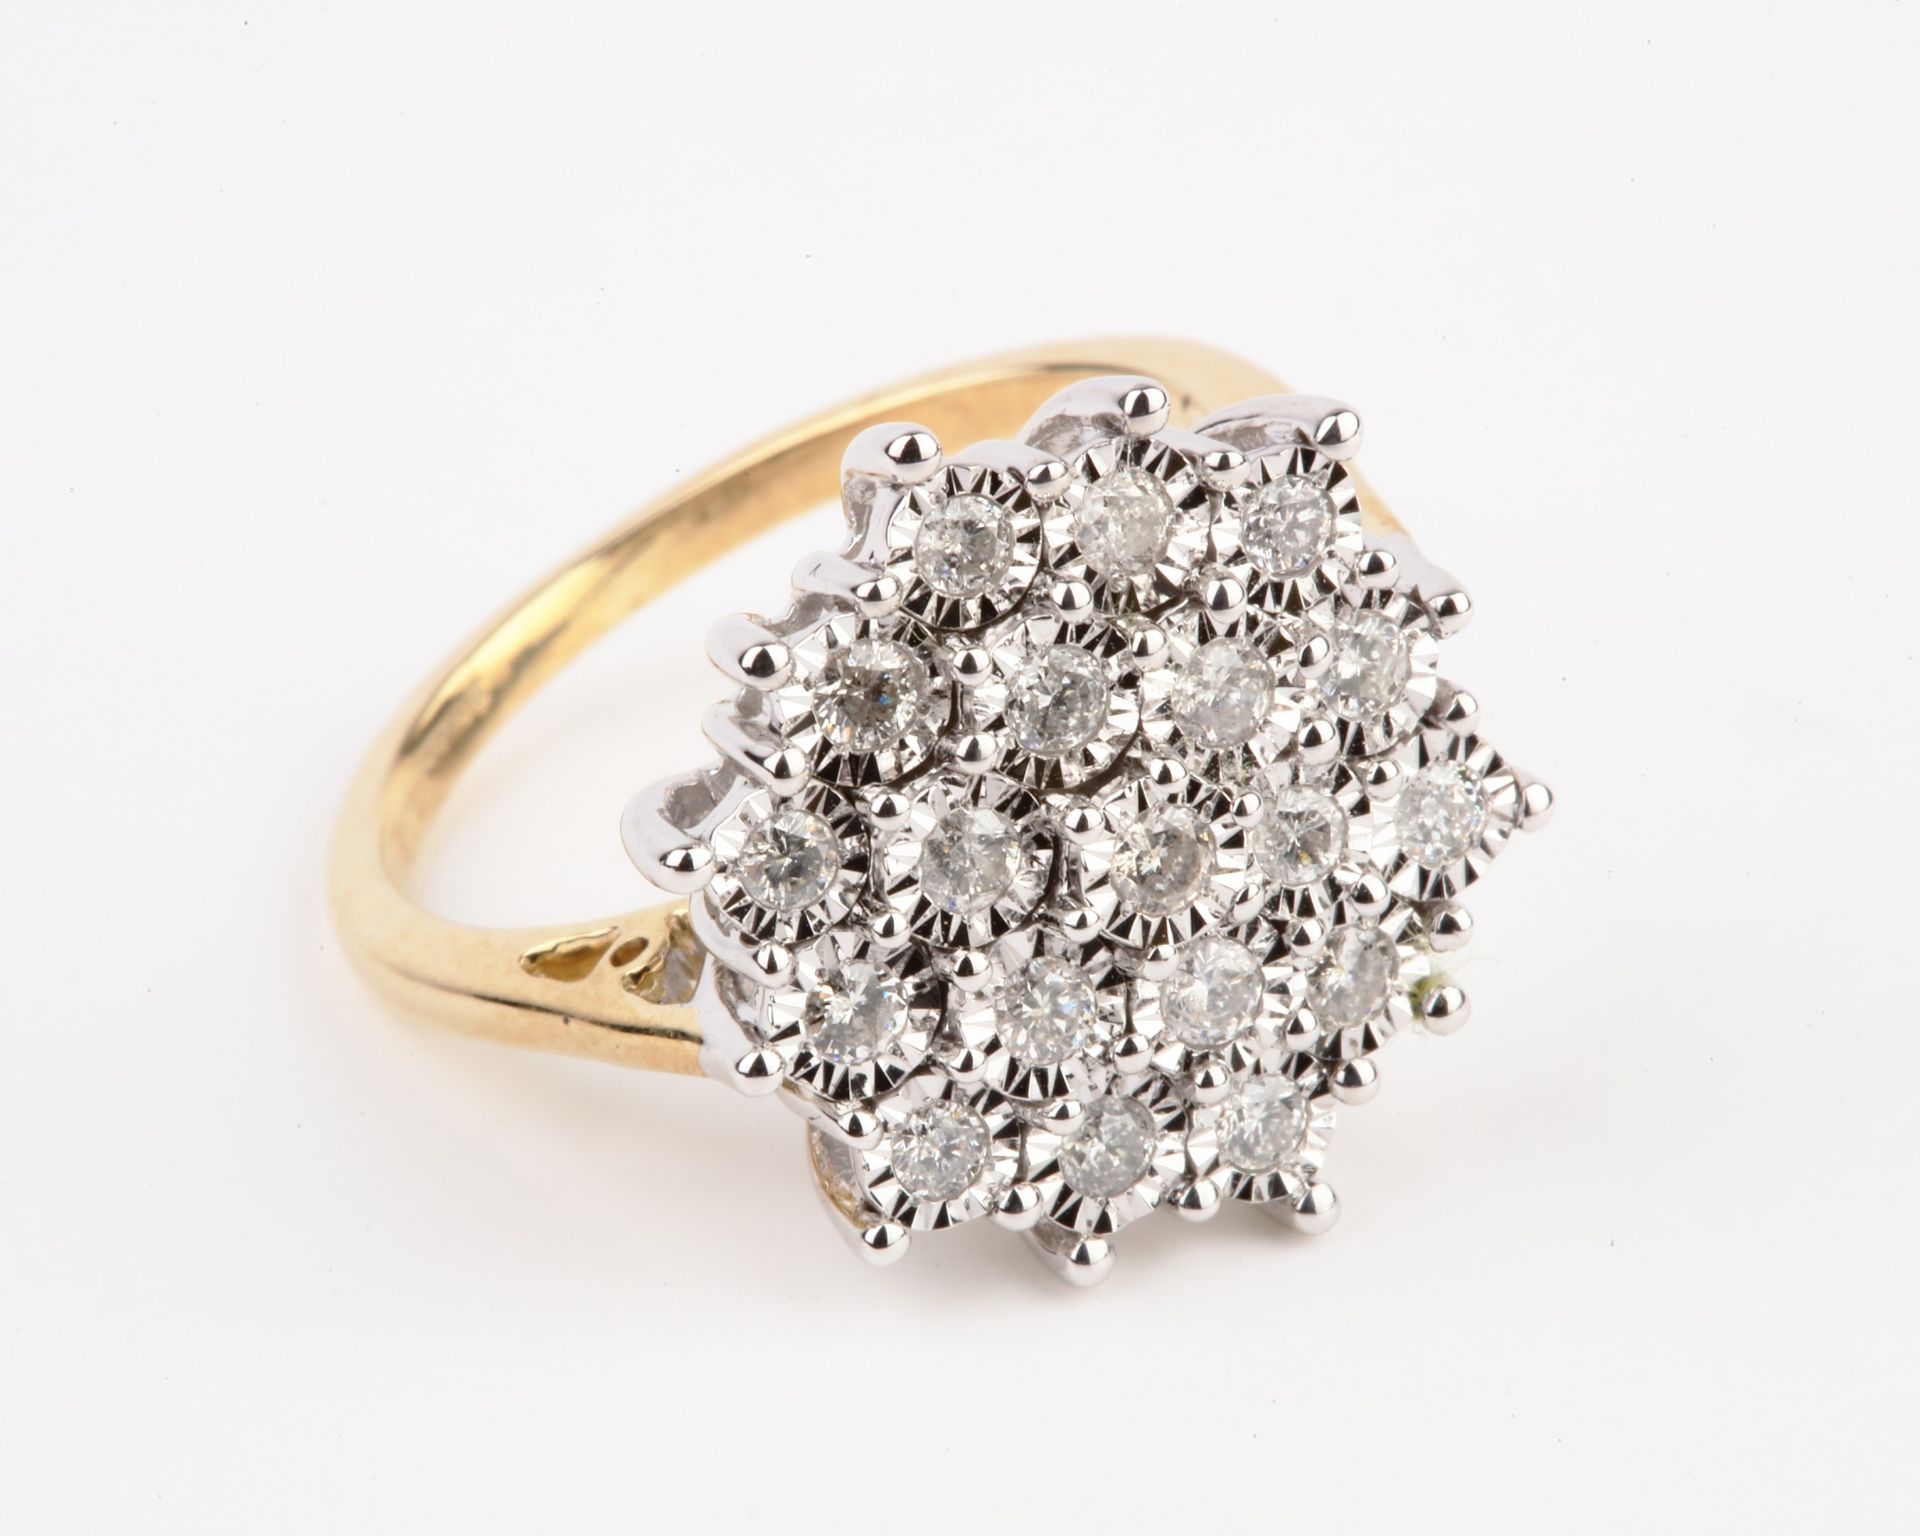 + VAT Brand New Yellow & White Gold 0.5ct Diamond Cluster Ring Set With 19 Diamonds